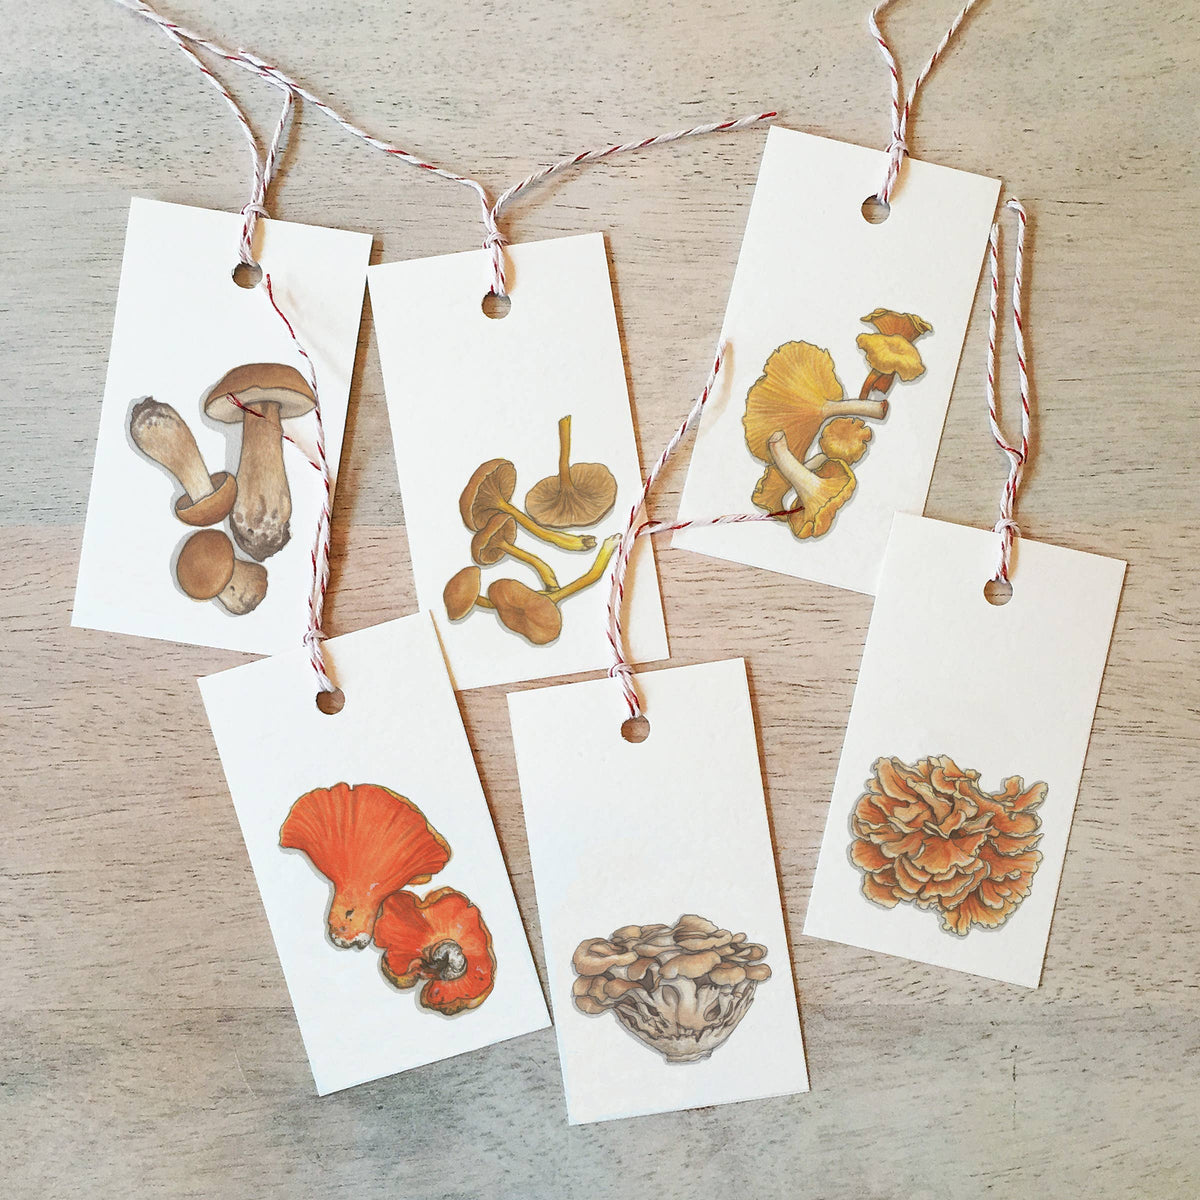 Yeesan Loh - Mushrooms / Gift Tags Wild